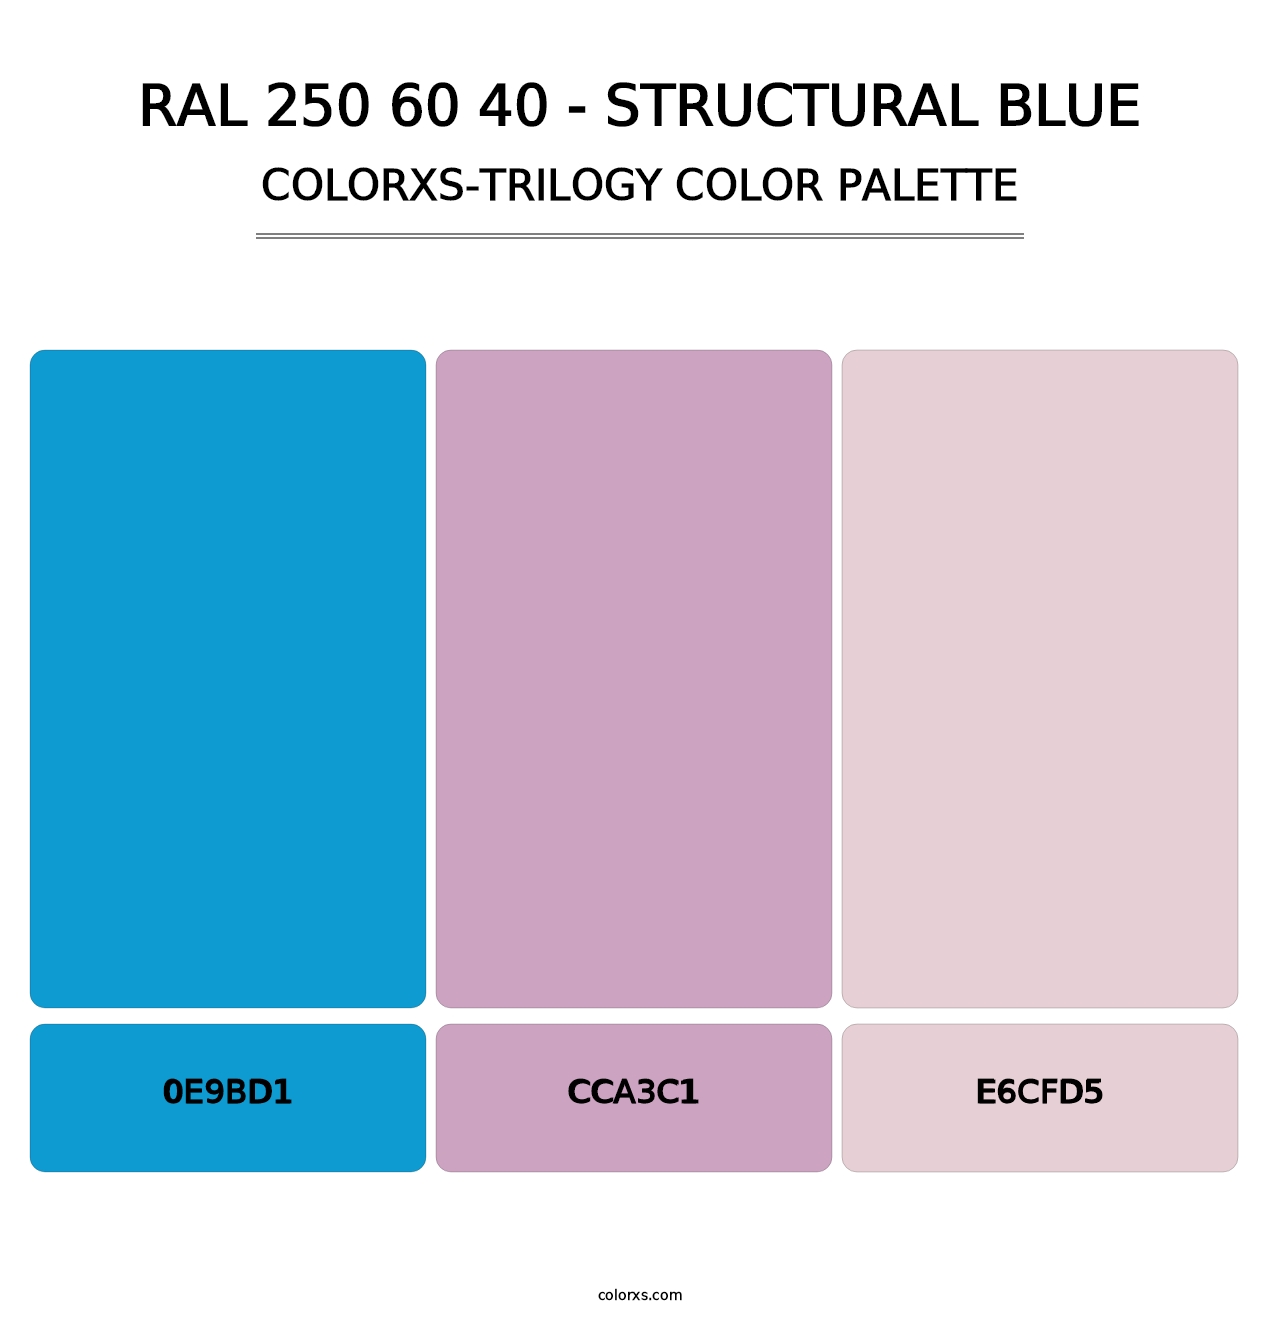 RAL 250 60 40 - Structural Blue - Colorxs Trilogy Palette